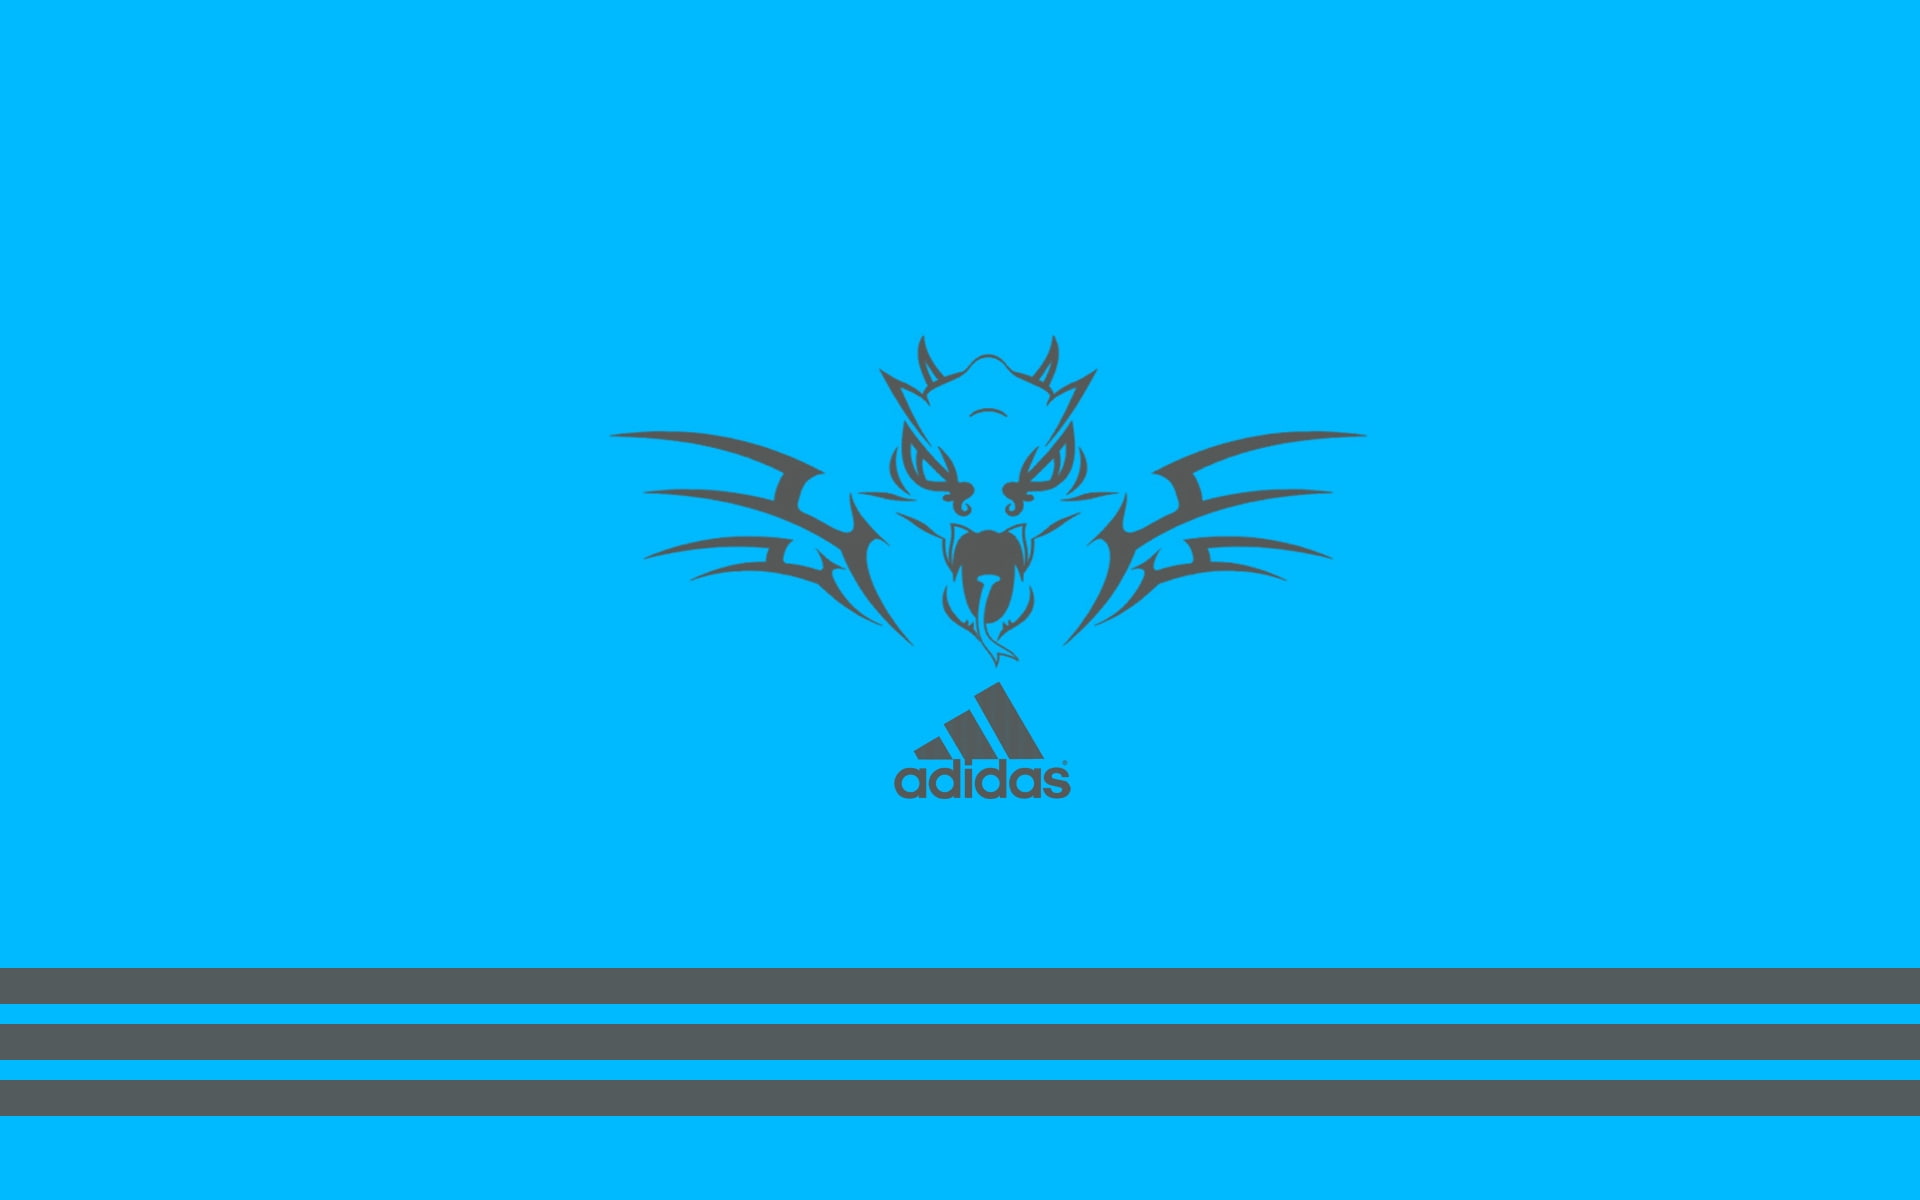 Adidas Fantasy Logo, background, fashion, brand